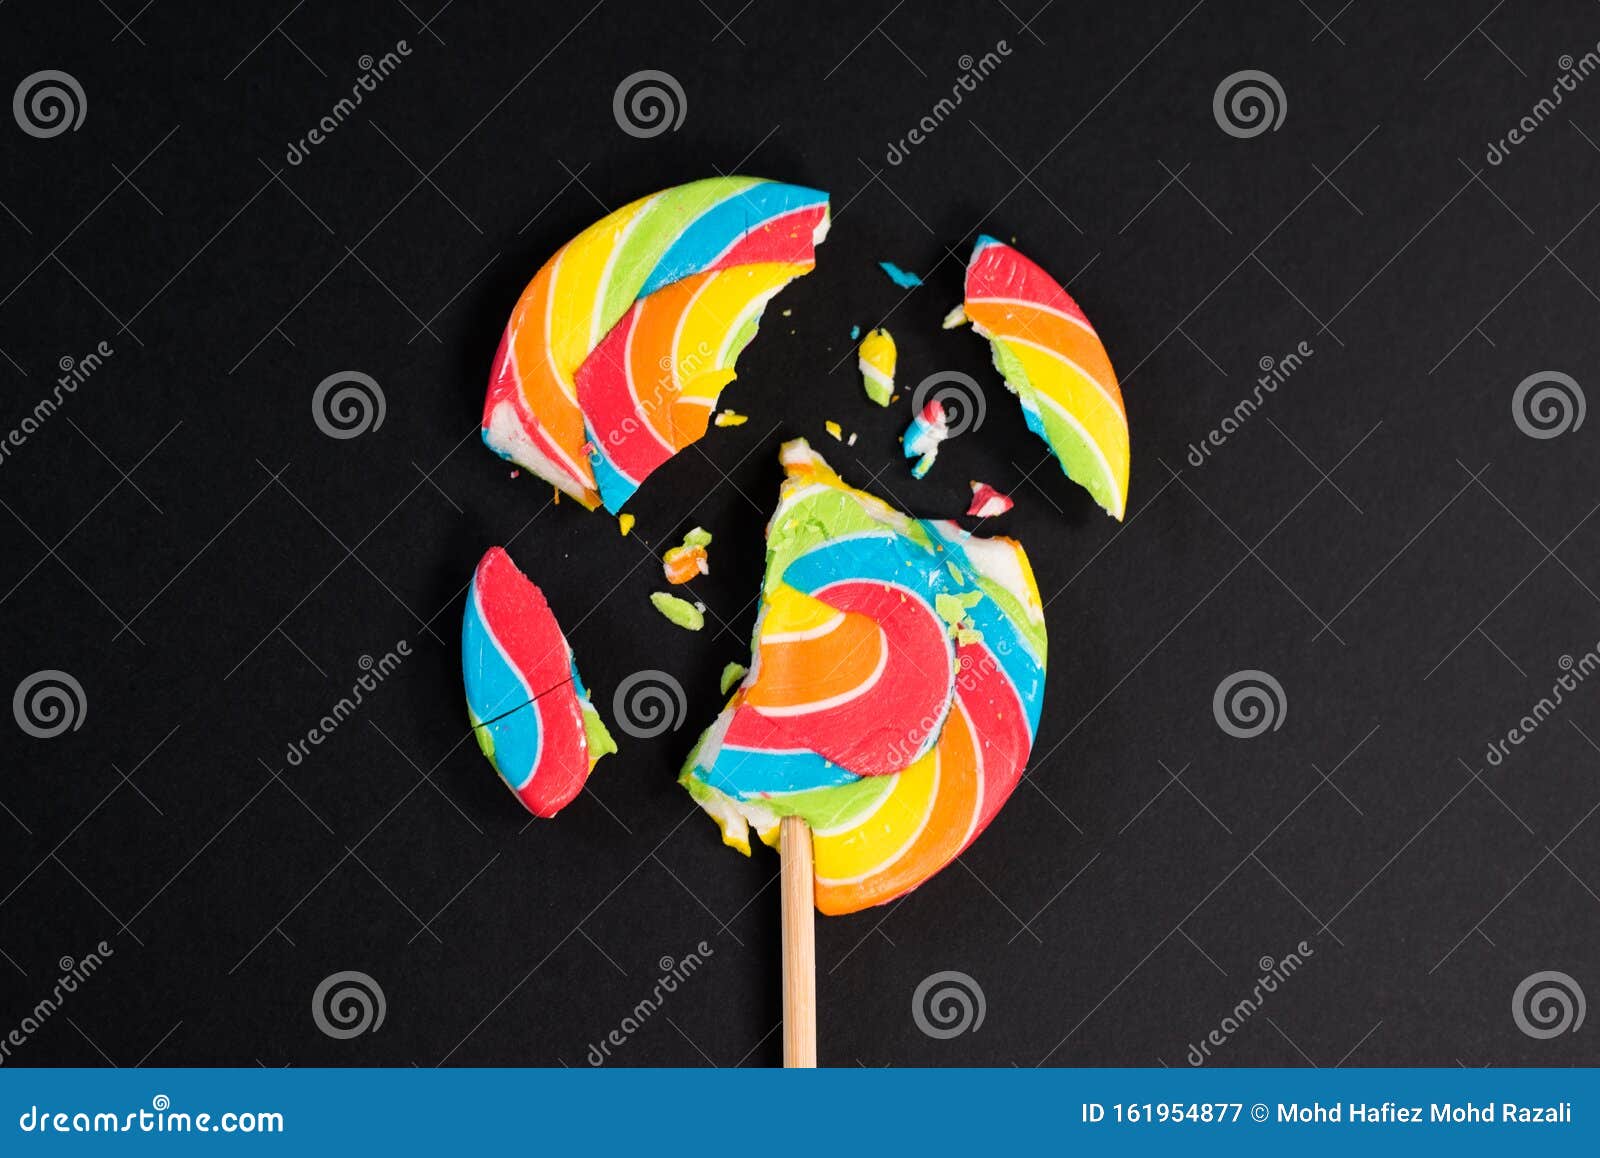 Swirl Round Broken Lollipop on Black Background. Stock Image - Image of ...